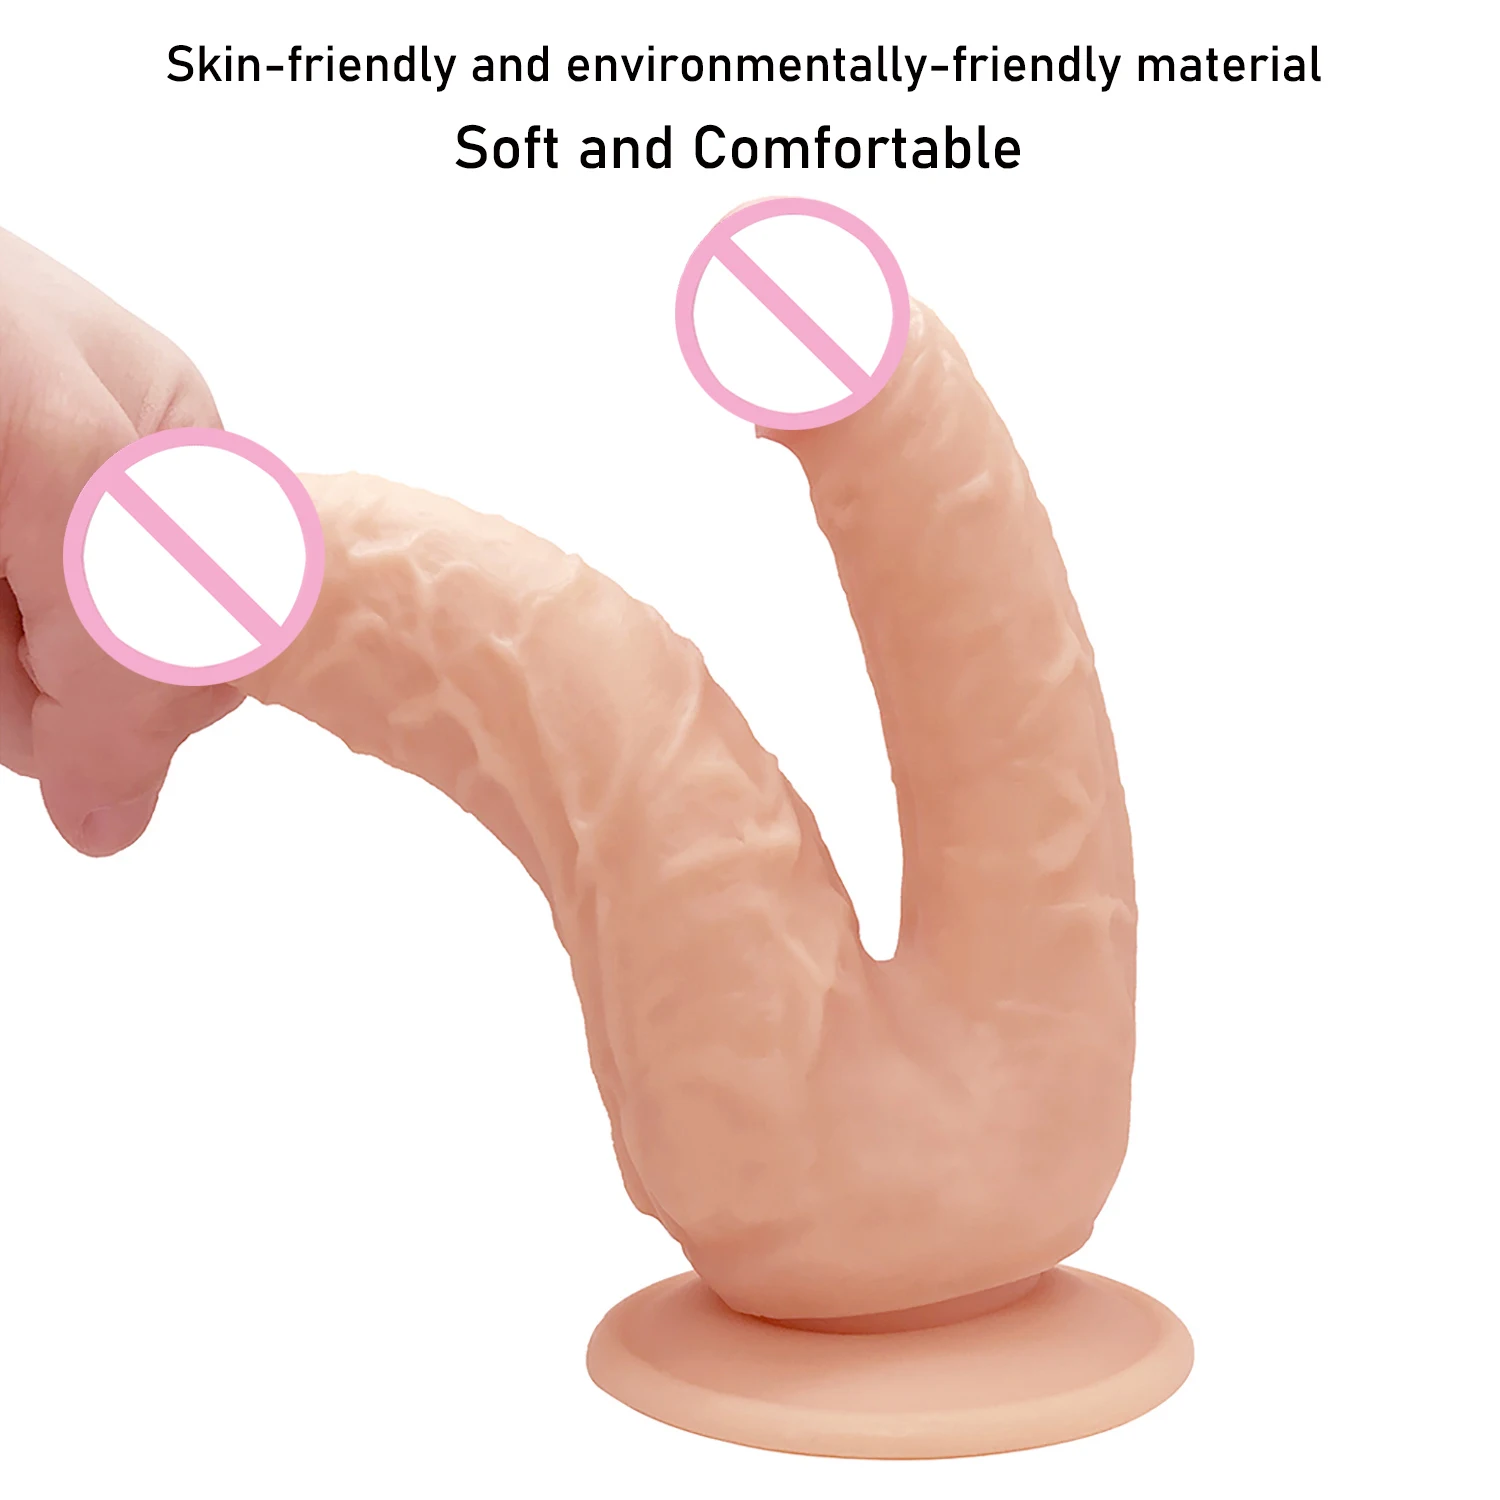 China Manufacturer Huge Double Dildos Double Penetration Vagina and Anus Soft Skin Feel Penis Double Headed Phallus Sex Toys for Women Masturbation Wholesale H75dc0444cb434fd3ba574419708ebb68v